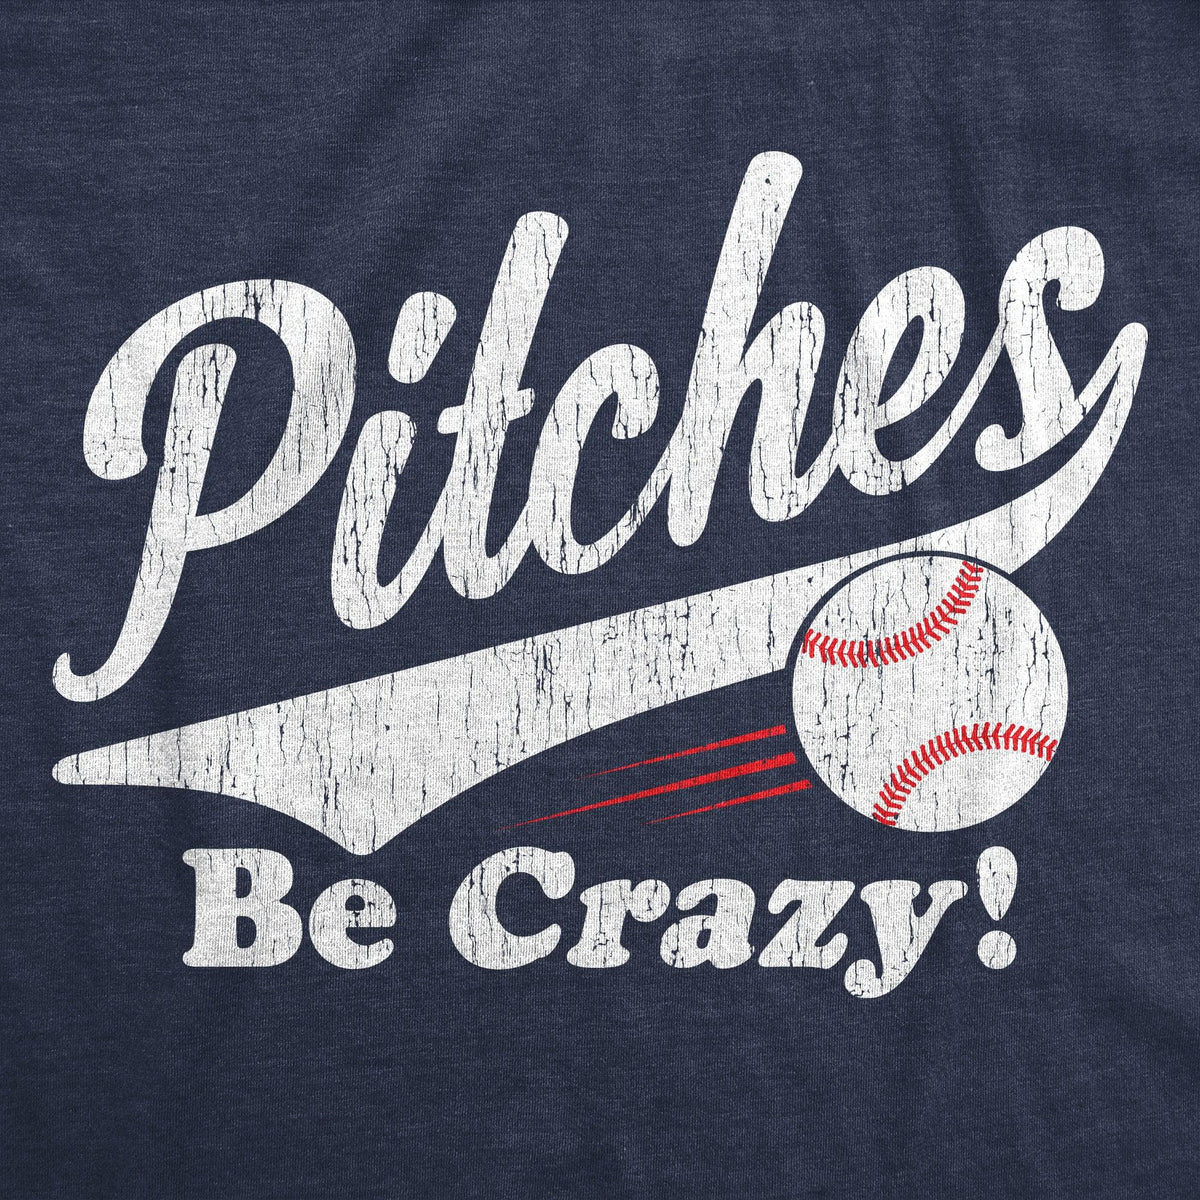 Pitches Be Crazy Women&#39;s Tshirt  -  Crazy Dog T-Shirts